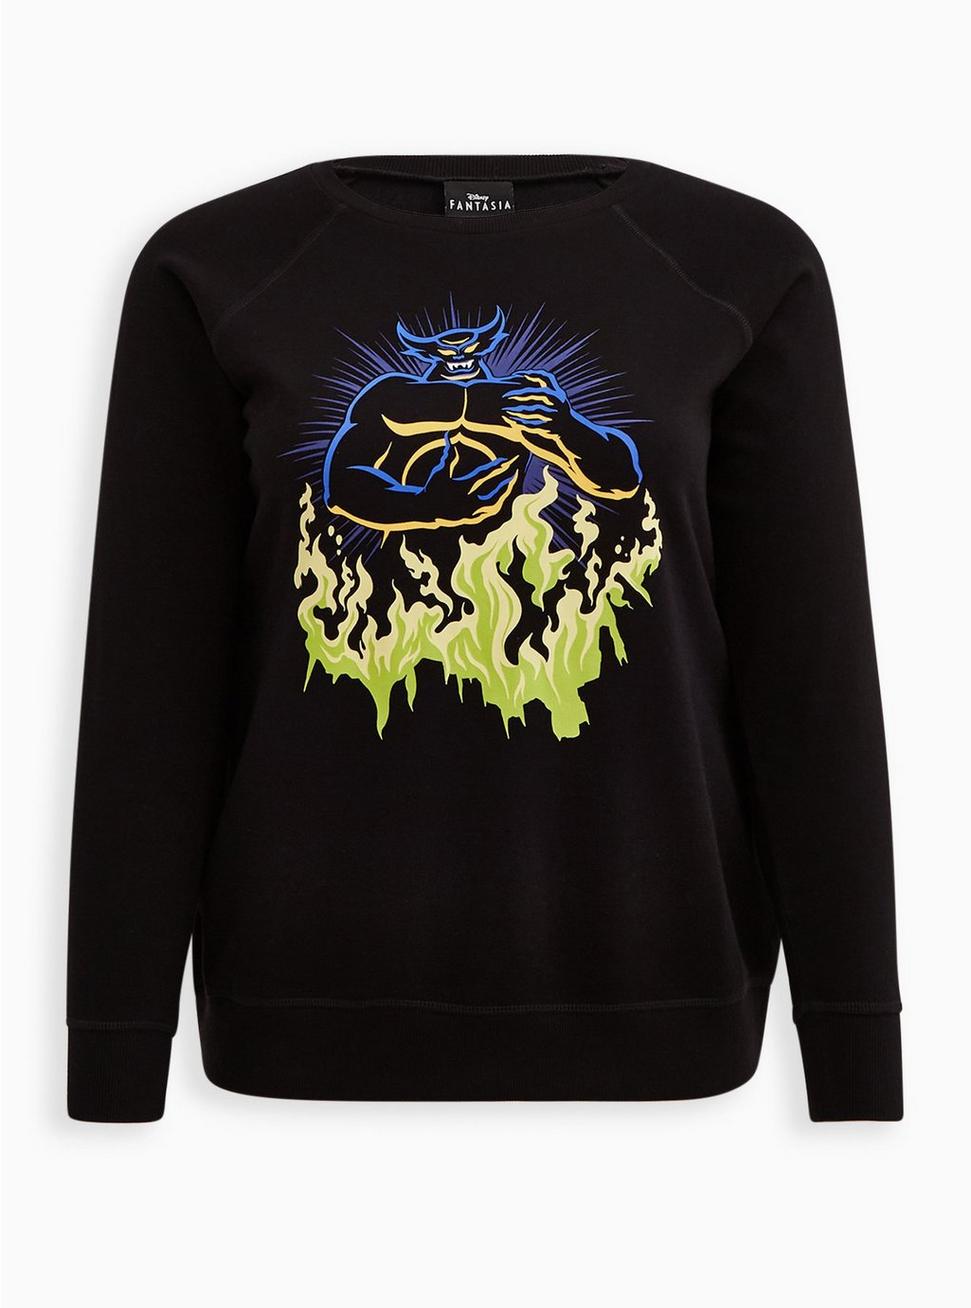 Plus Size Sweatshirt - Fleece Disney Fantasia Chernabog Wings, DEEP BLACK, hi-res